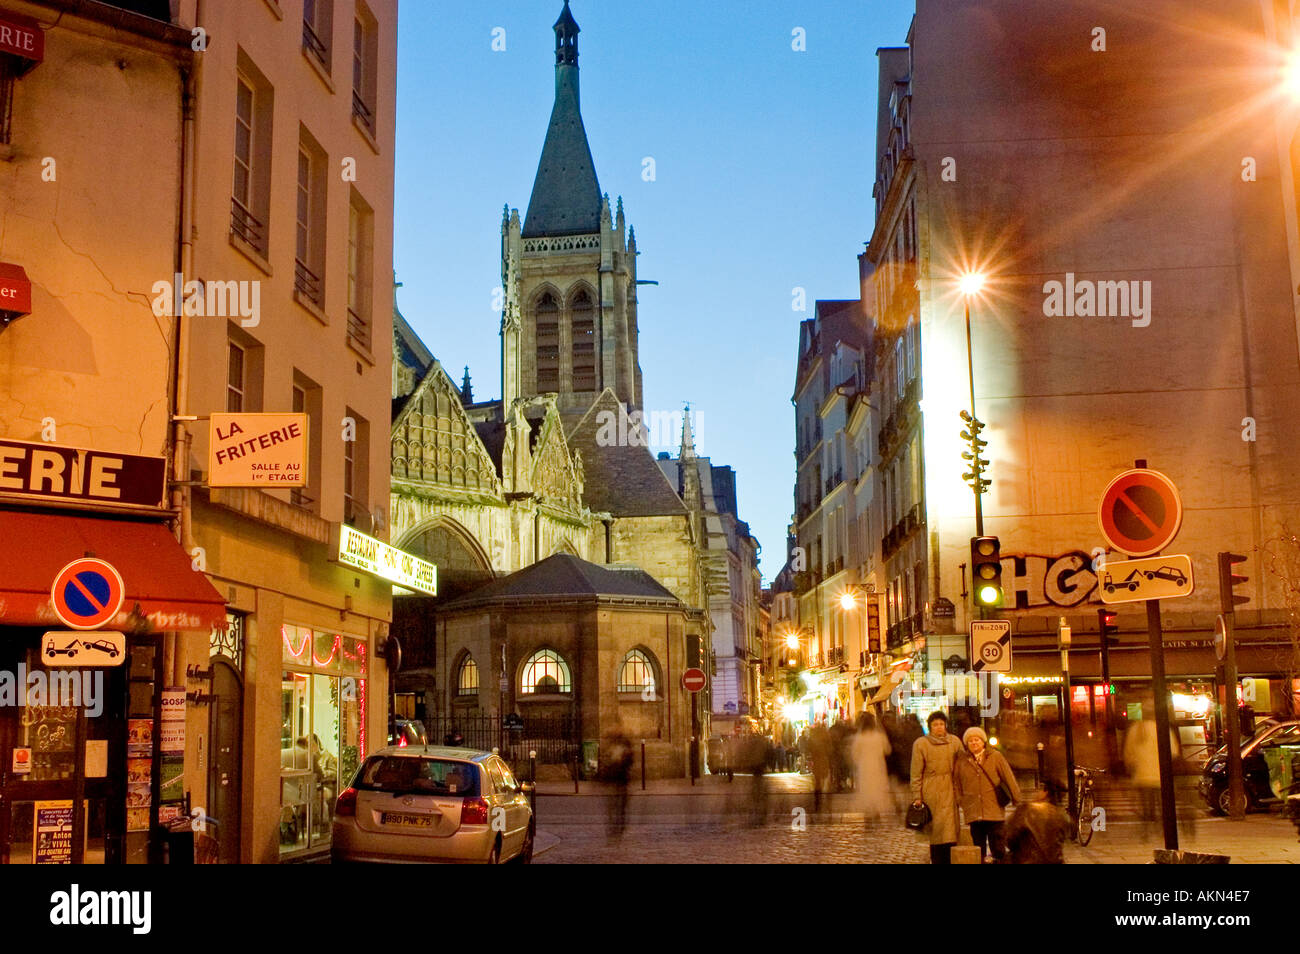 Paris France Religion 'Eglise Saint Severin' Church Exterior 'Street Scene' 'Rue Galande' 'Latin Quarter' 'Lit Up' at Night, Paris street lamp Stock Photo